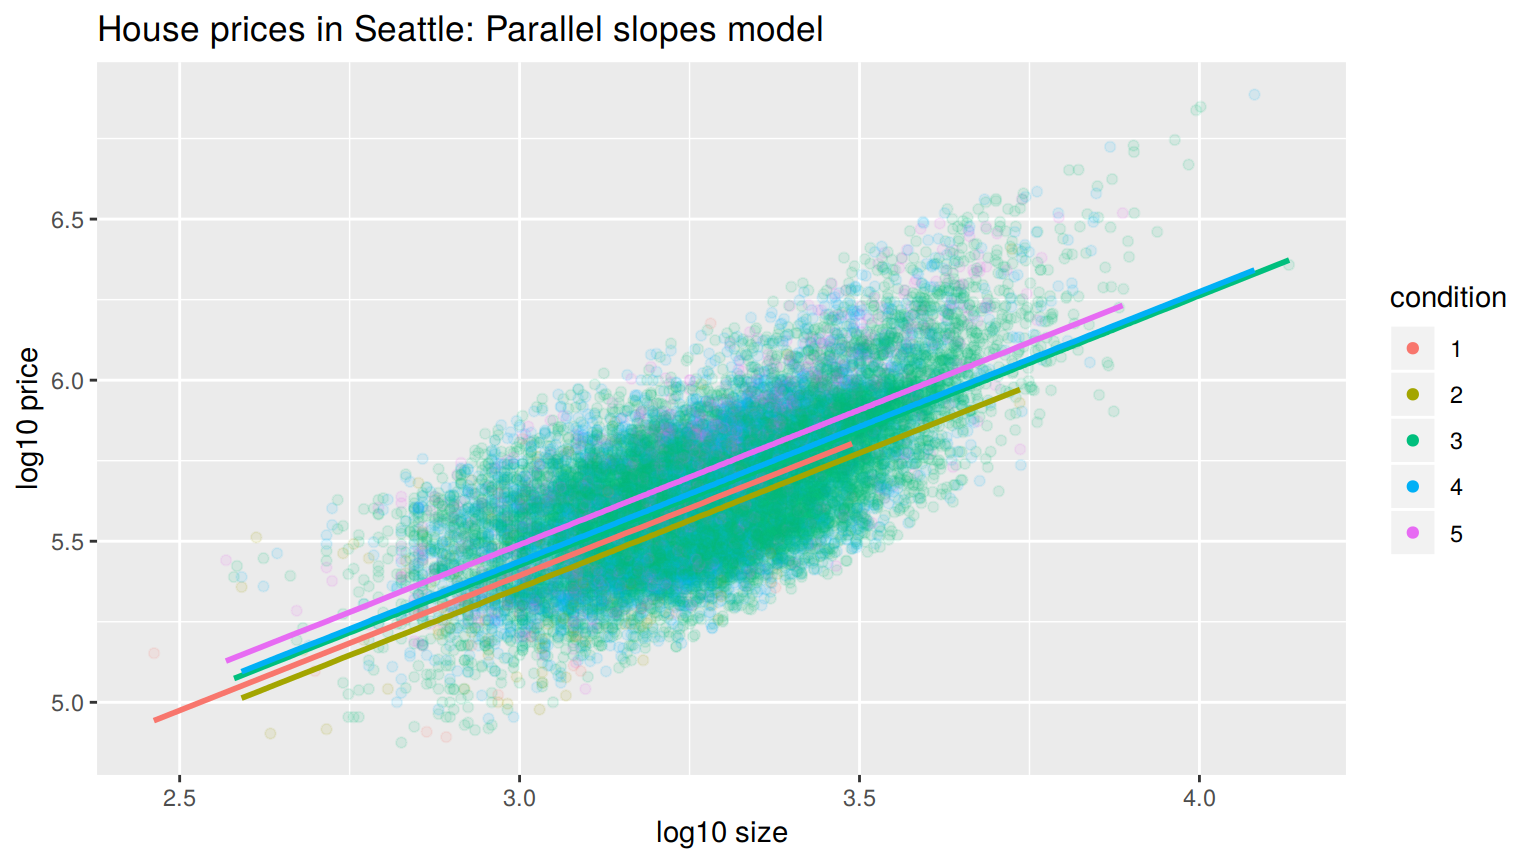 Parallel slopes model